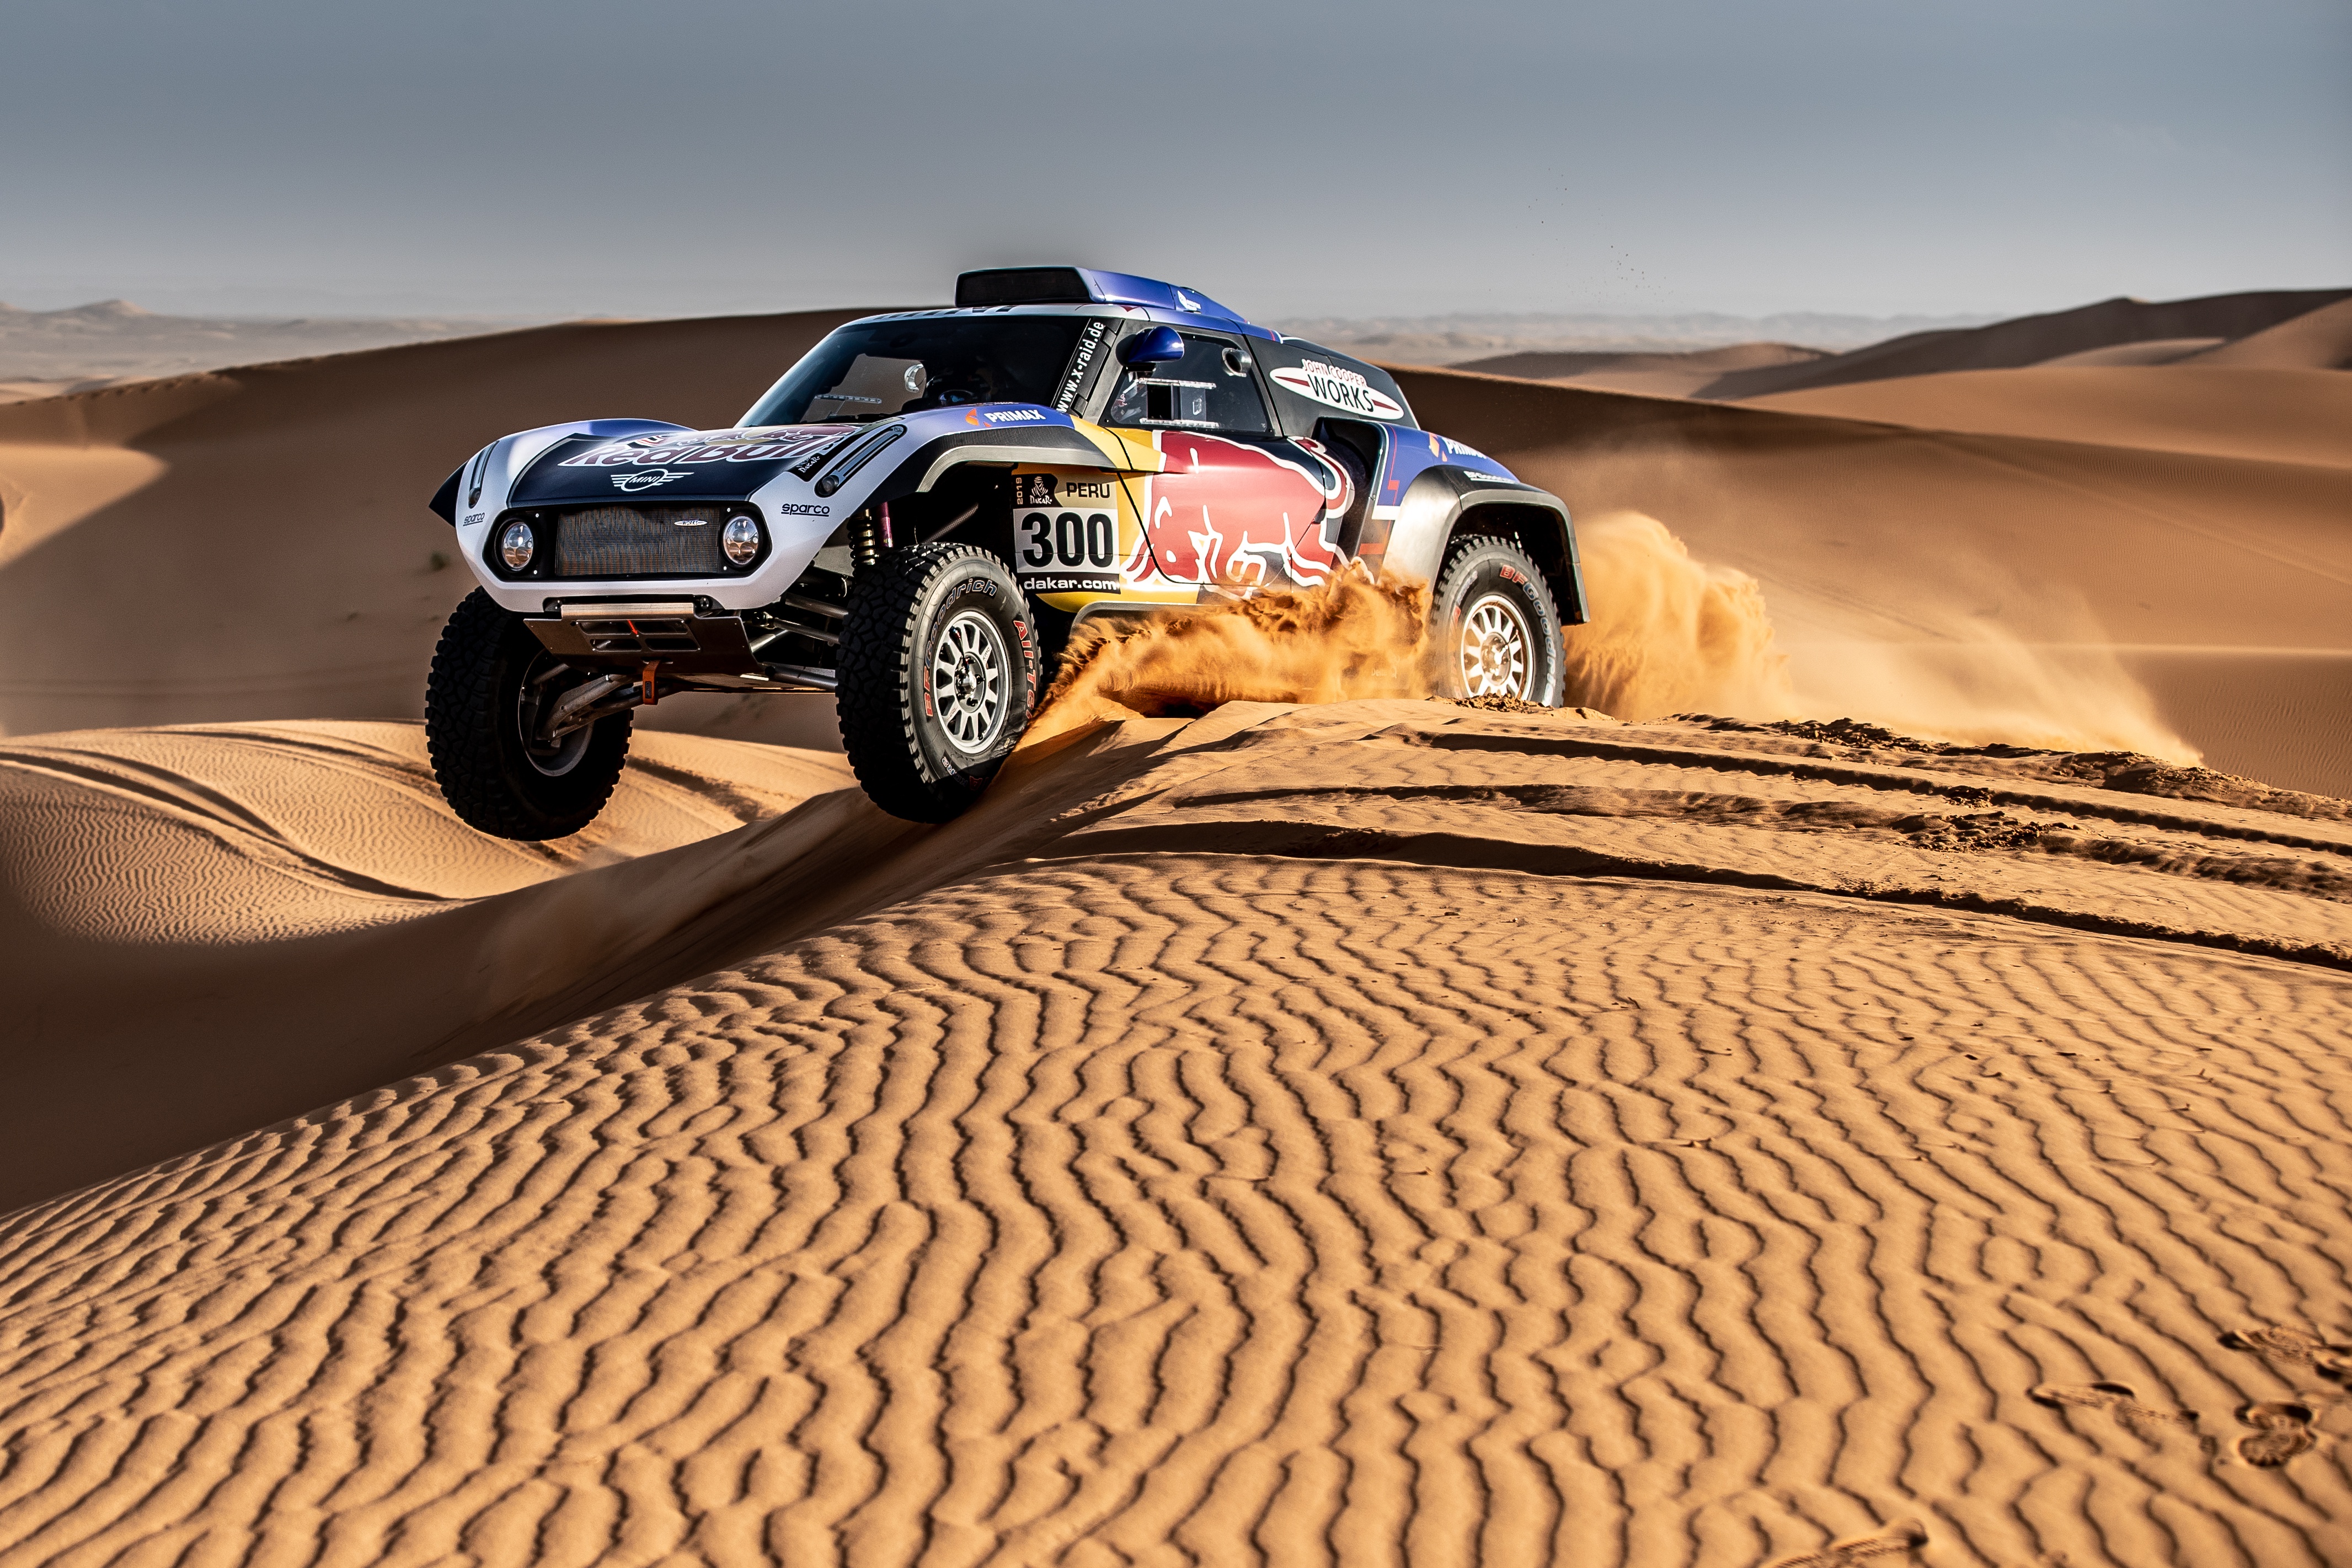 Car Desert Rallying Sand Vehicle 4264x2843